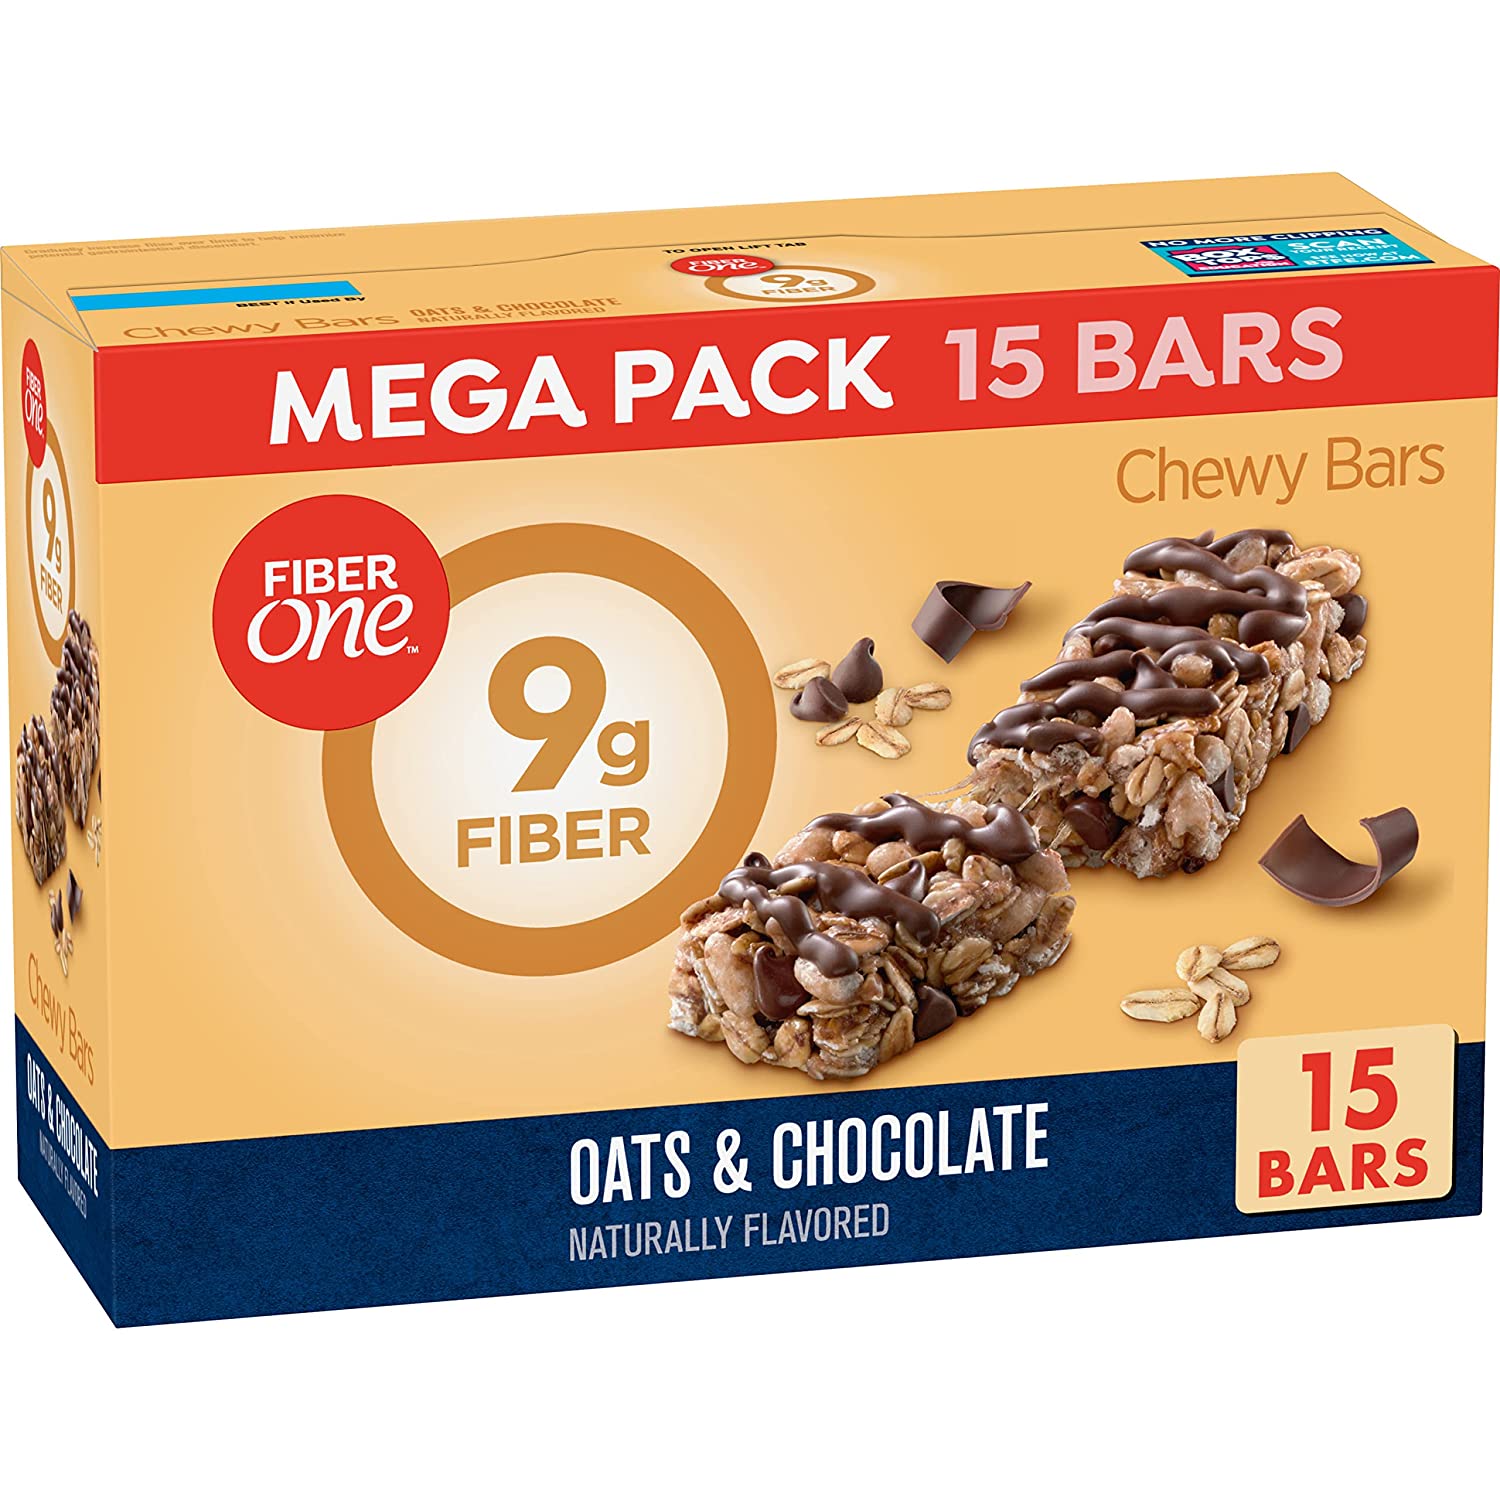 Fiber One Chewy Bars, Oats & Chocolate, Fiber Snacks, Mega Pack, 15 ct - $6.32